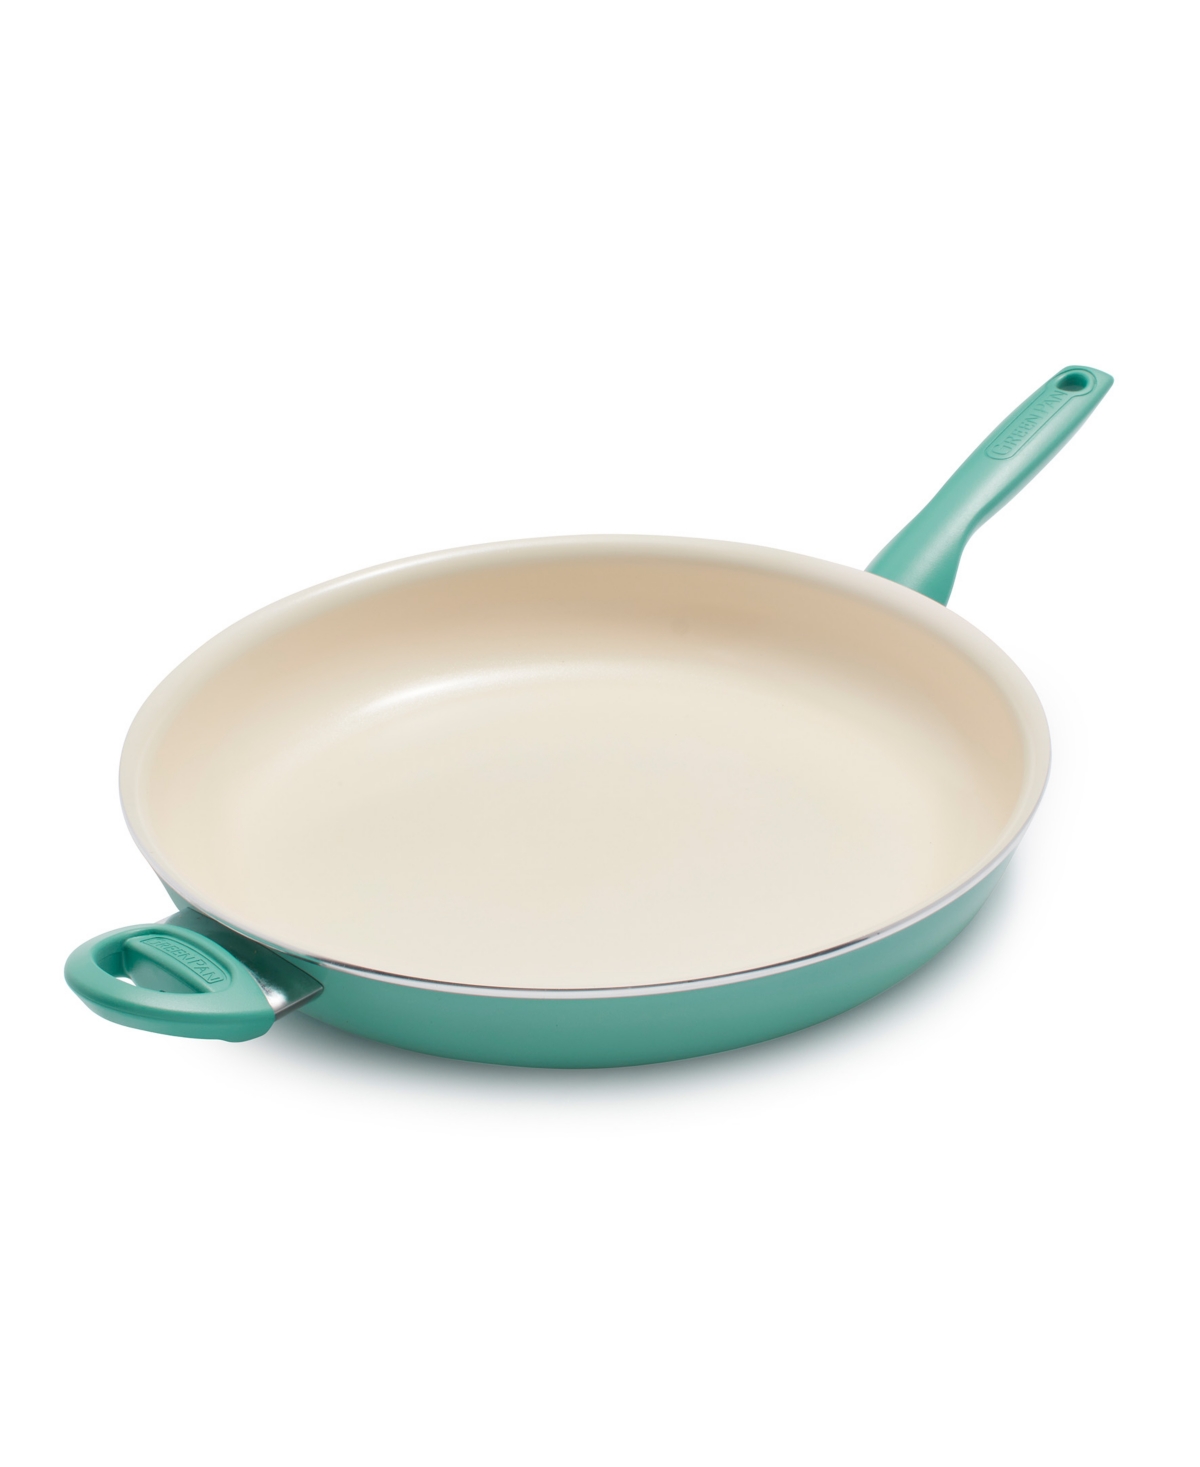 Greenpan Rio Healthy Ceramic 13.5" Nonstick Great Big Frying Pan In Turquoise